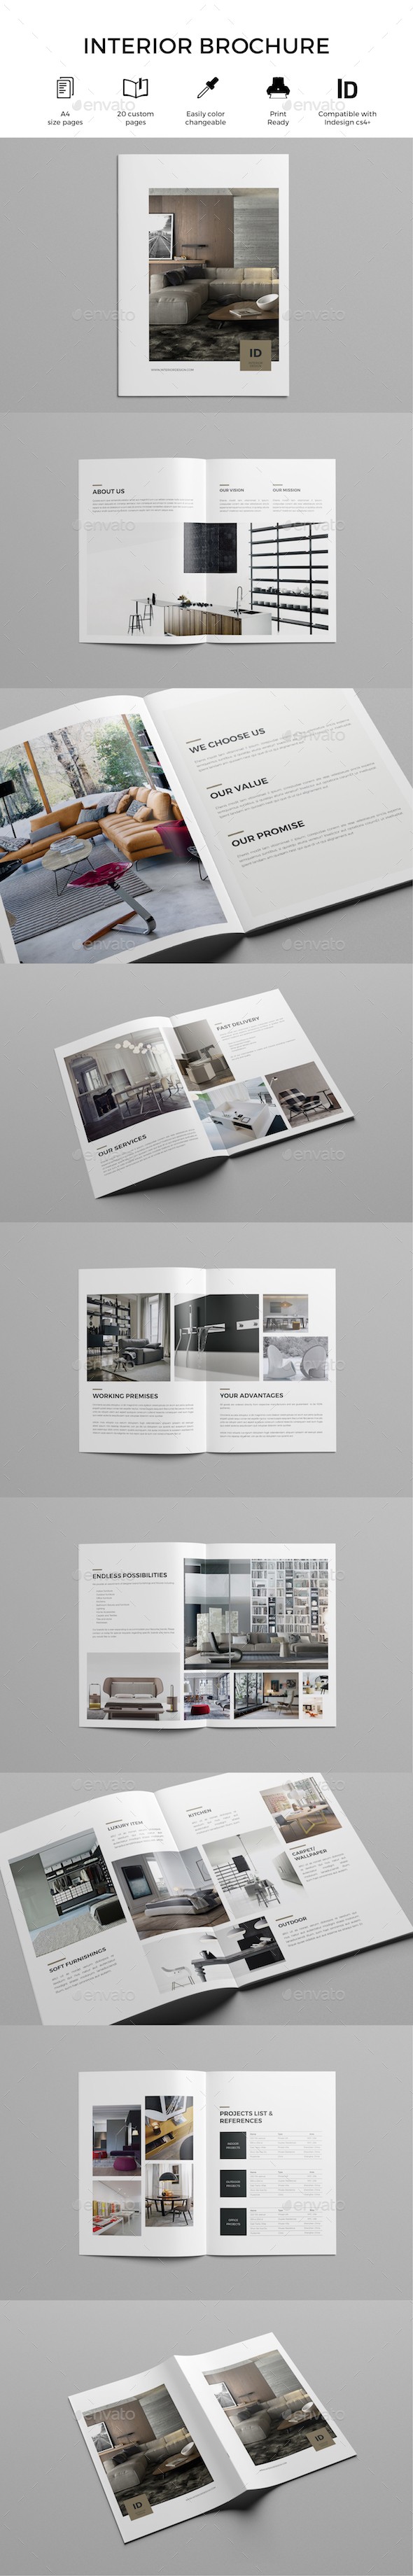 Interior Design Brochure Template By Tontuz GraphicRiver